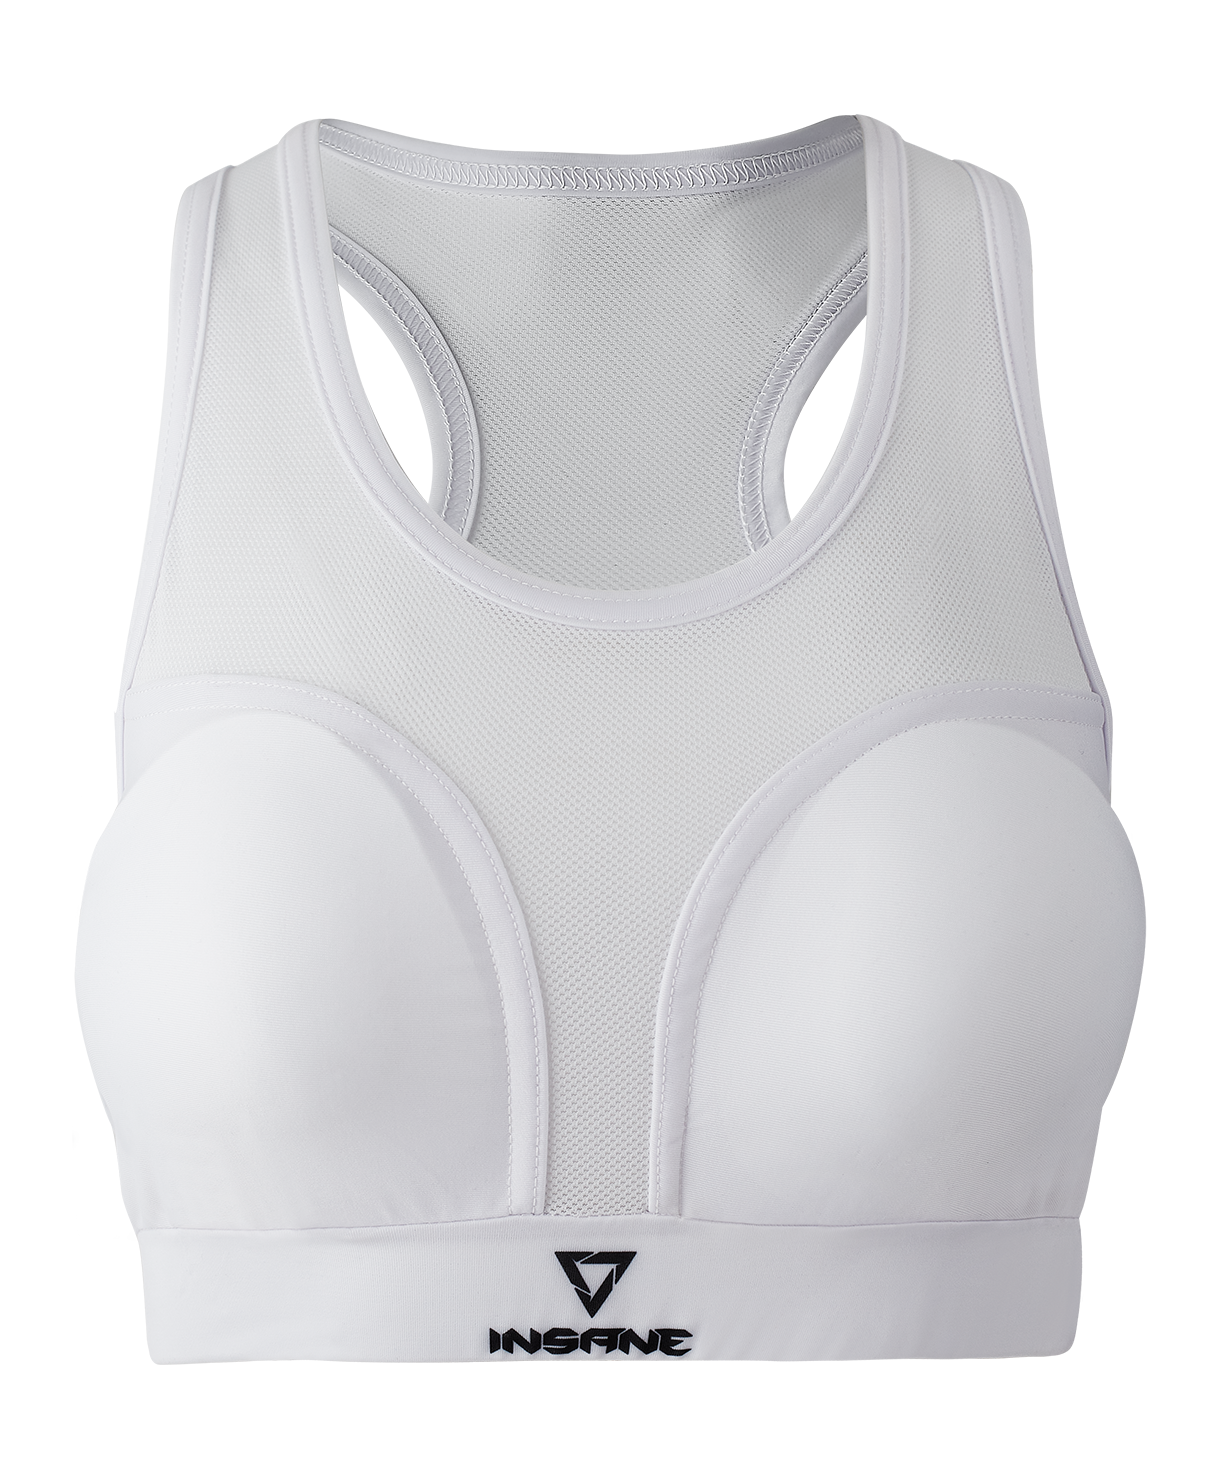 Защита груди Insane Protec W, белый, женский размер L